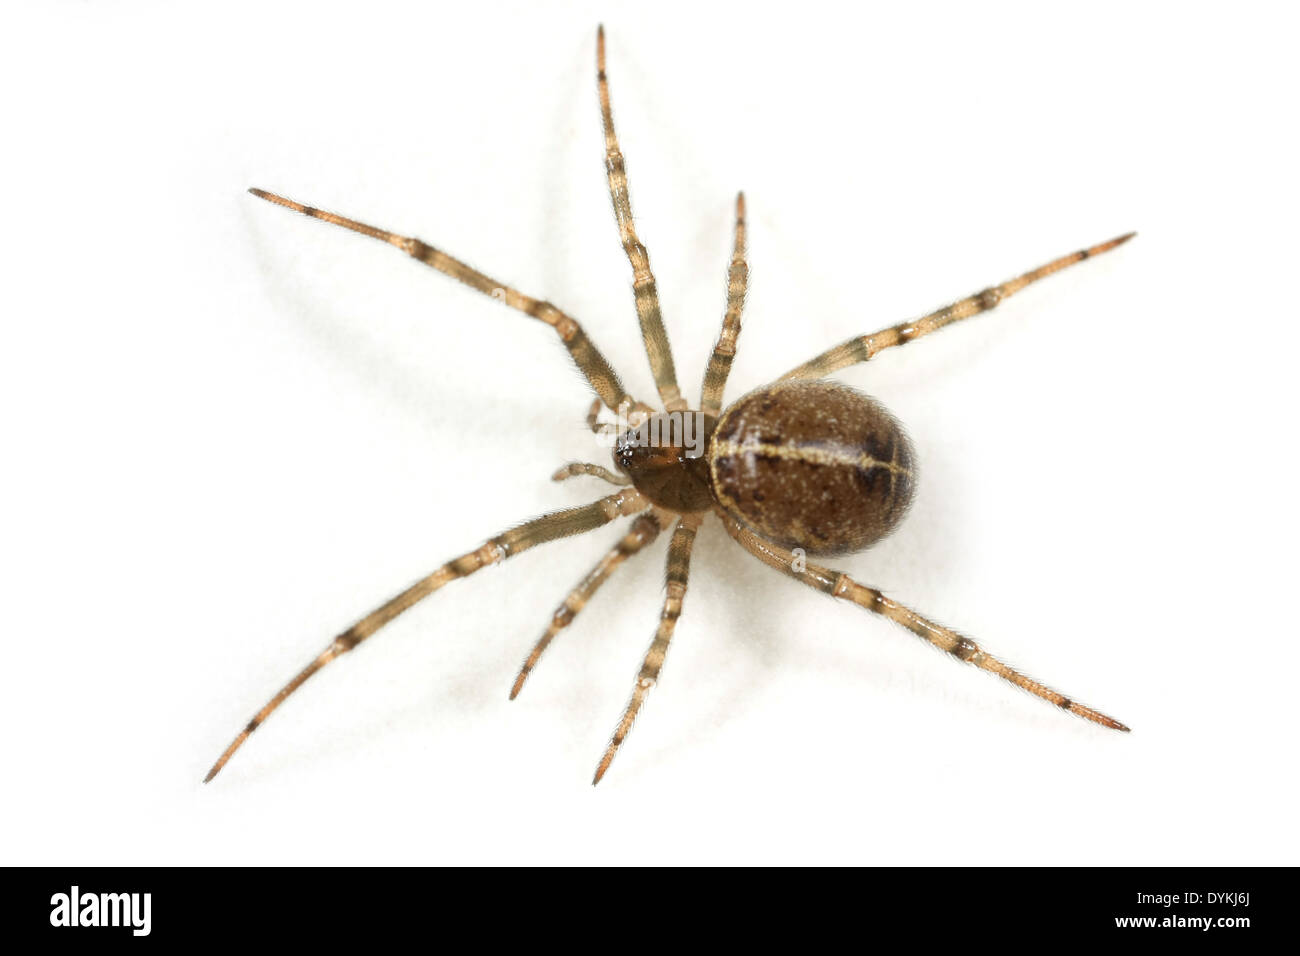 Hembra Steatoda castanea araña, parte de la familia Theridiidae - Telaraña tejedores. Foto de stock